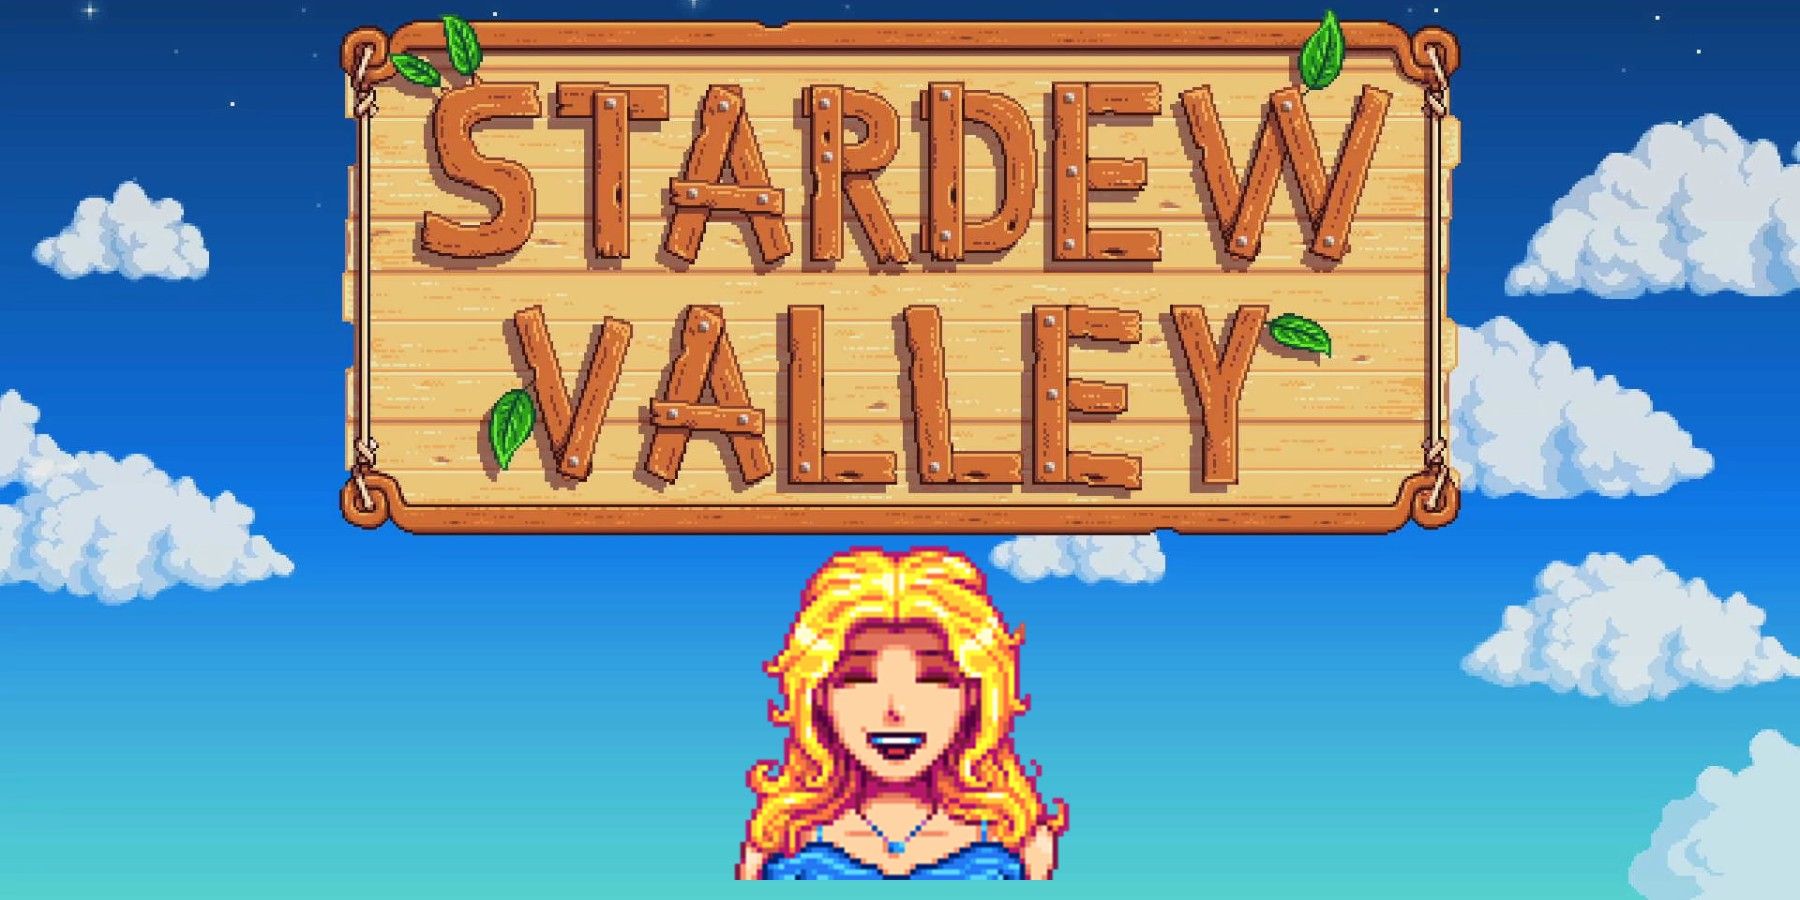 stardew valley logo and happy haley